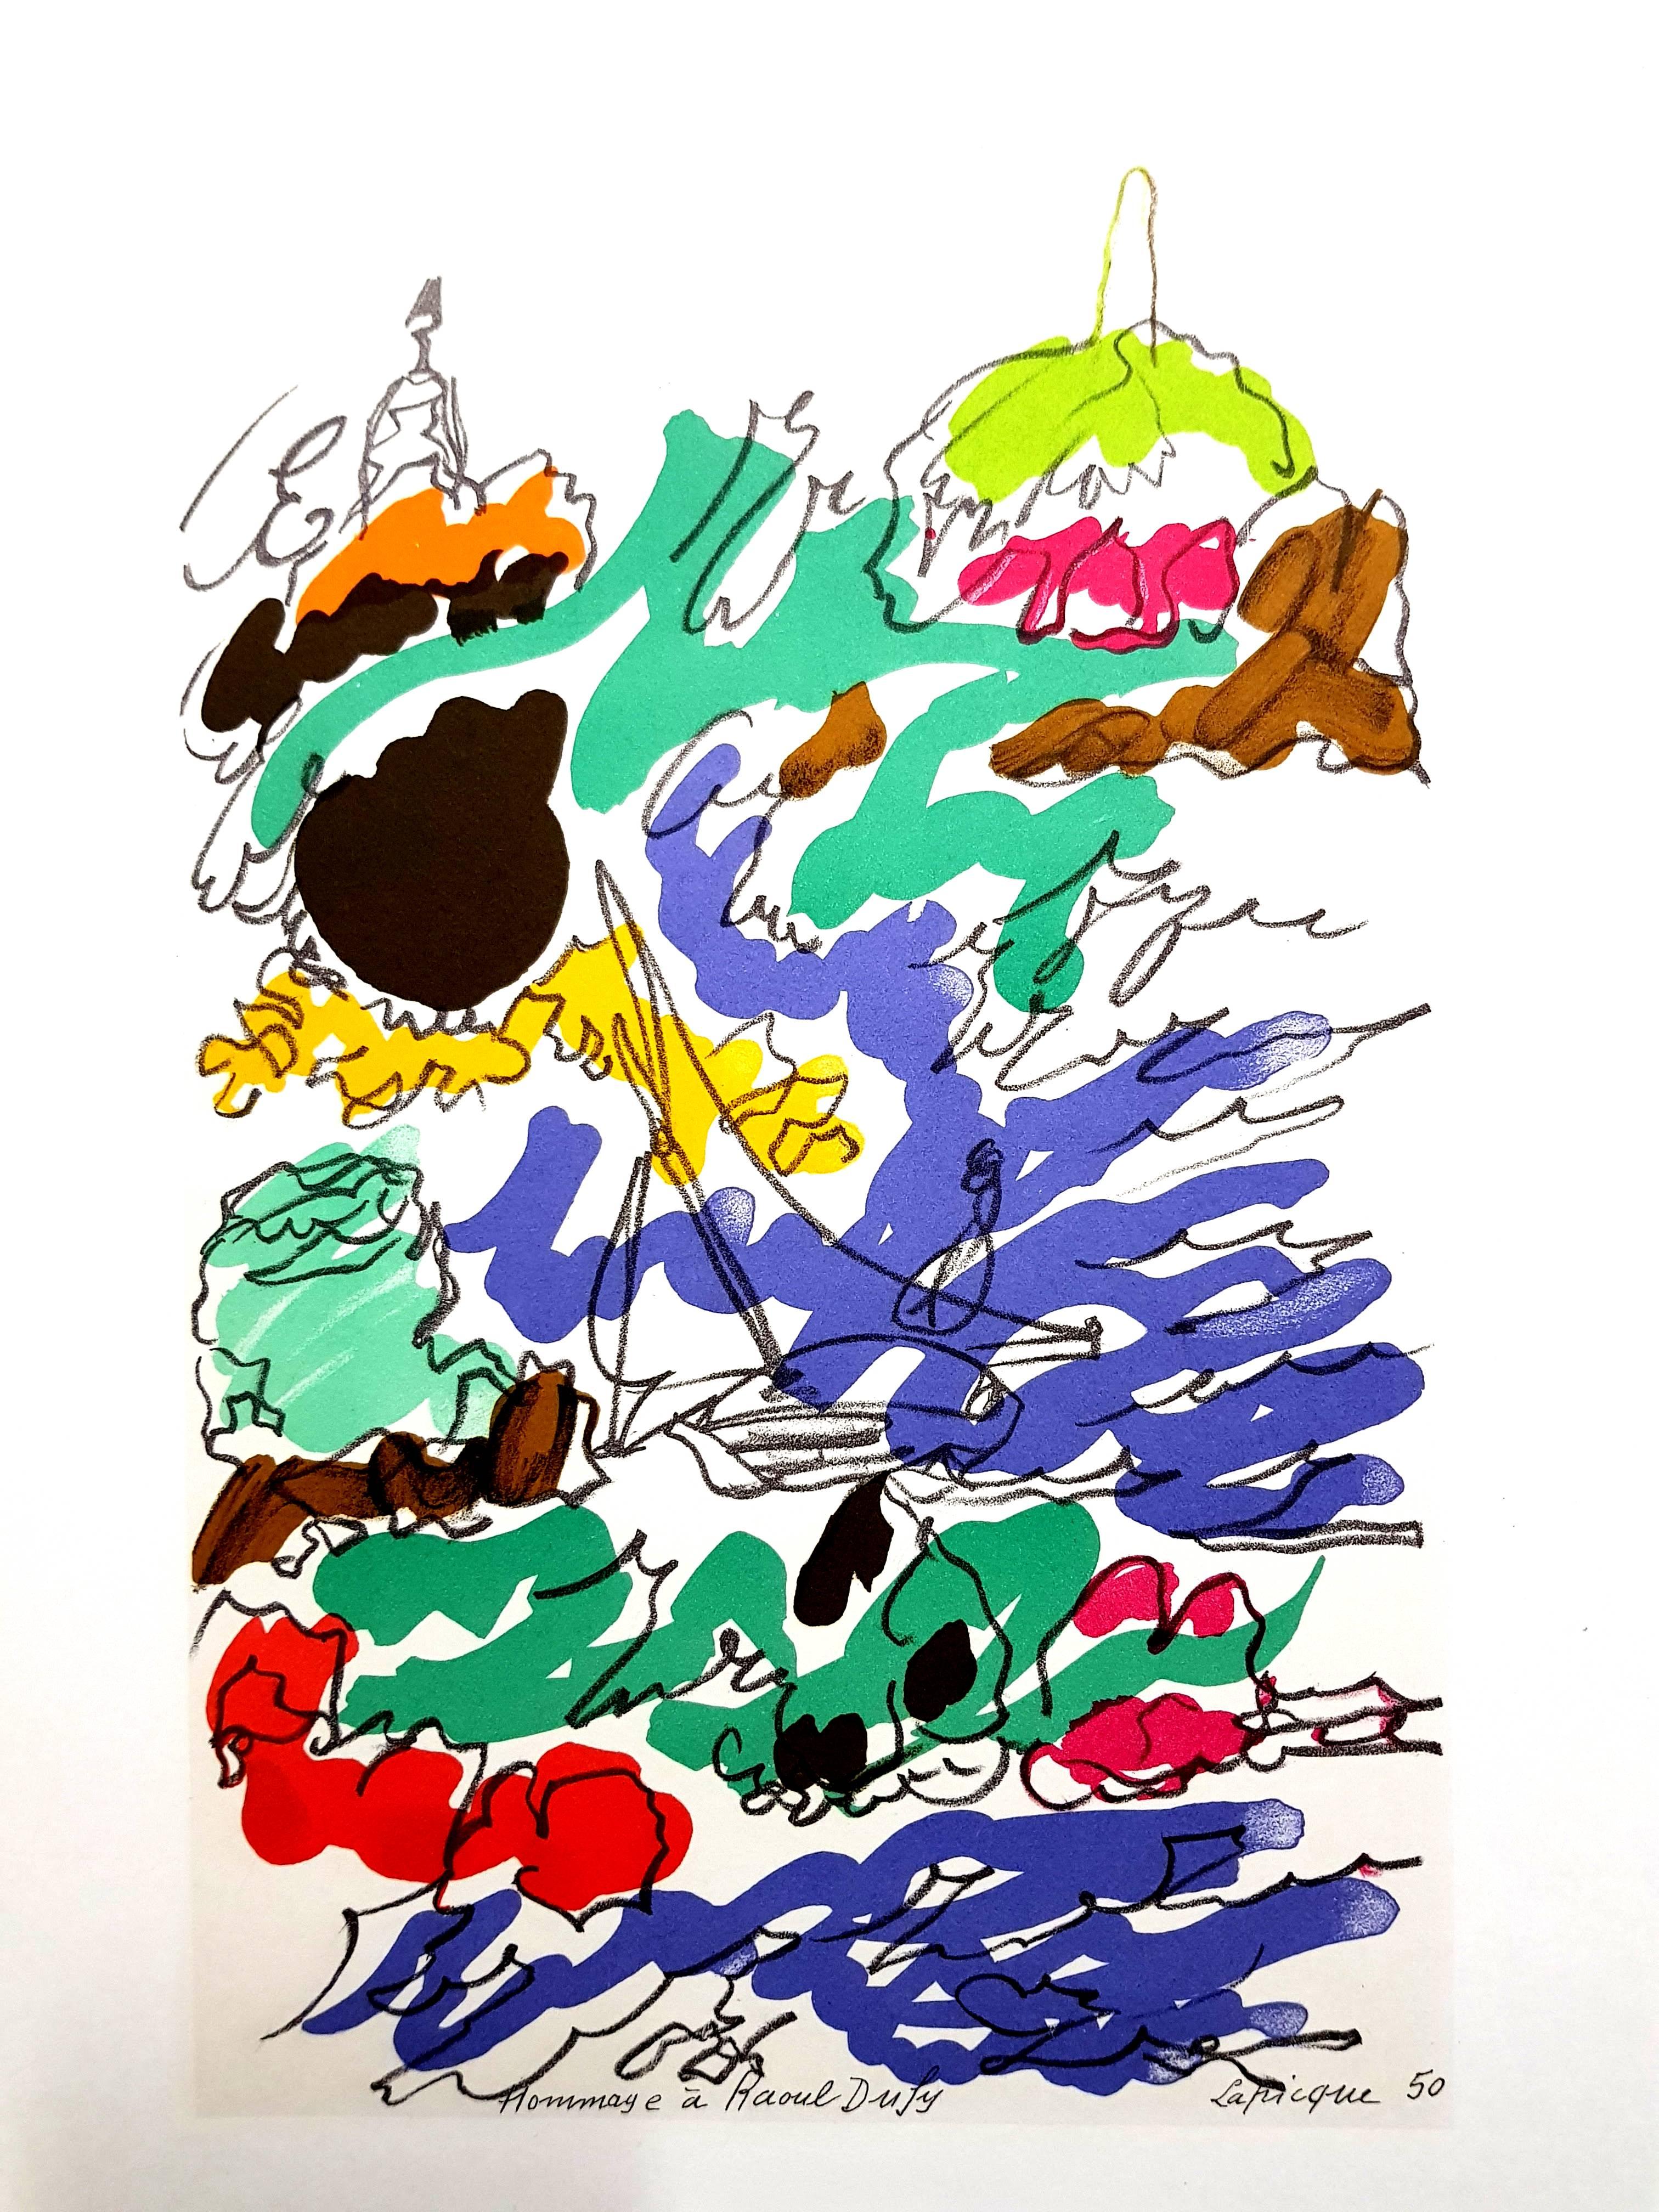 (after) Charles Lapicque
Lithograph after a watercolor, published in the book &quot;Lettre à mon peintre Raoul Dufy.&quot; Paris, Librairie Académique Perrin, 1965.
Printed signature
Dimensions: 30 x 24 cm
Condition : Excellent

Raoul Dufy
Born in